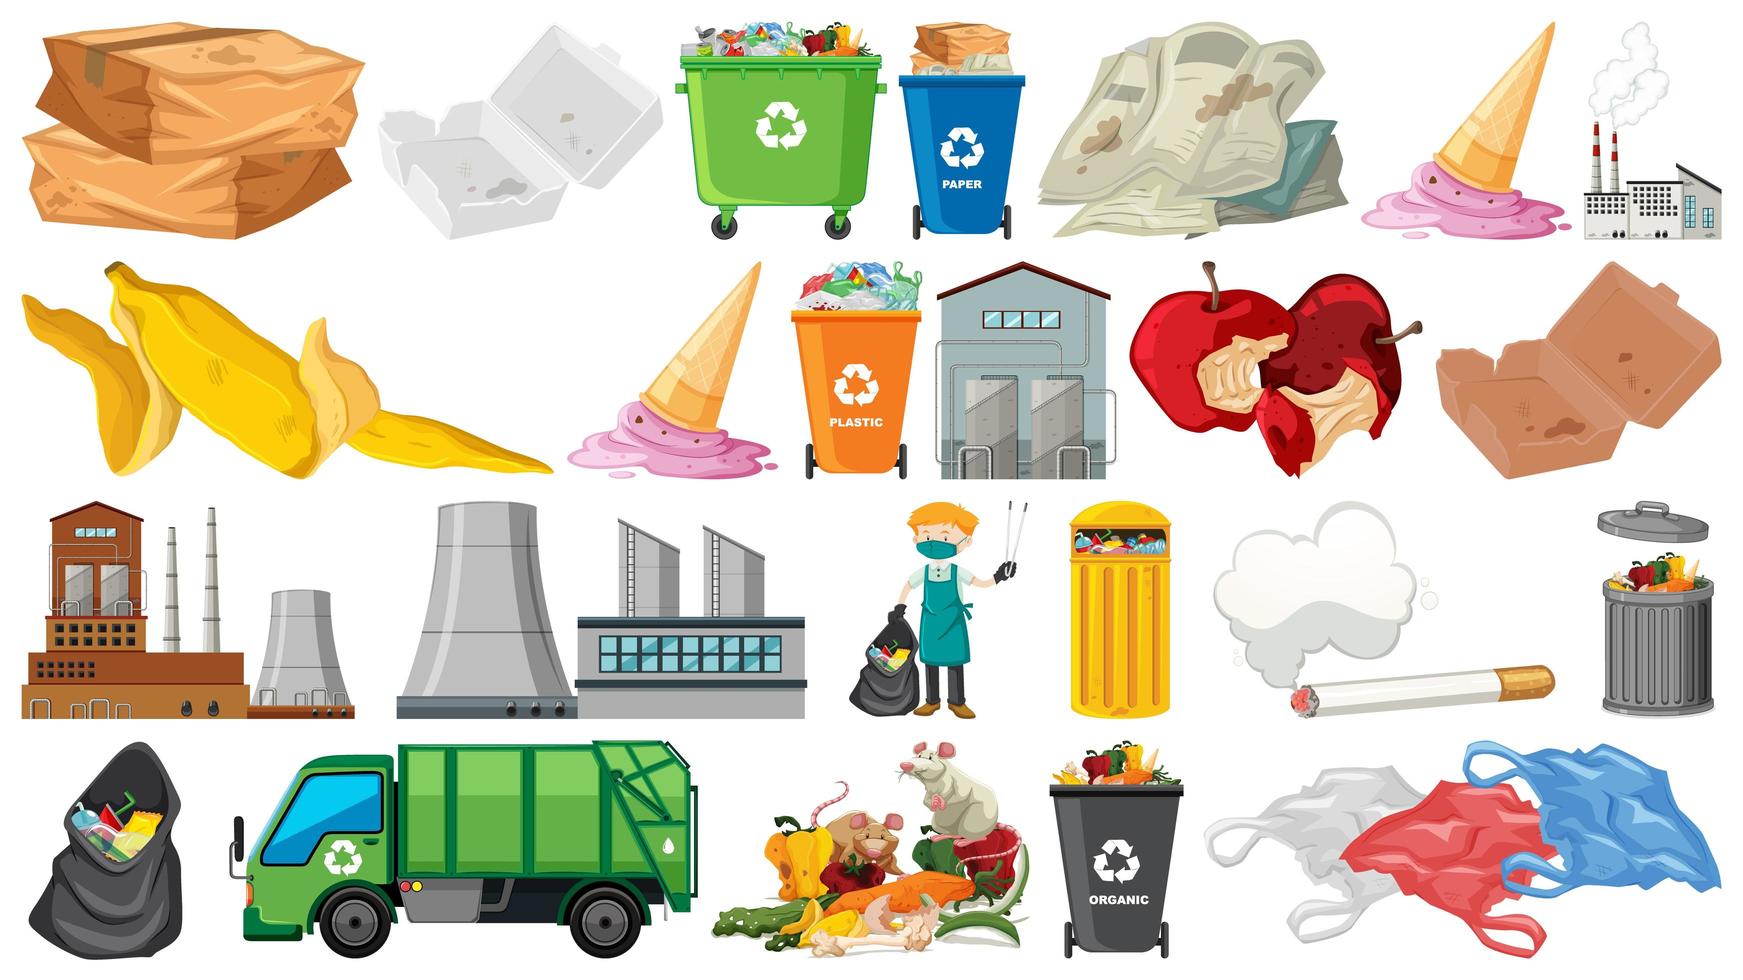 Verzameling van voorwerpen met afval en vervuilingsthema vector